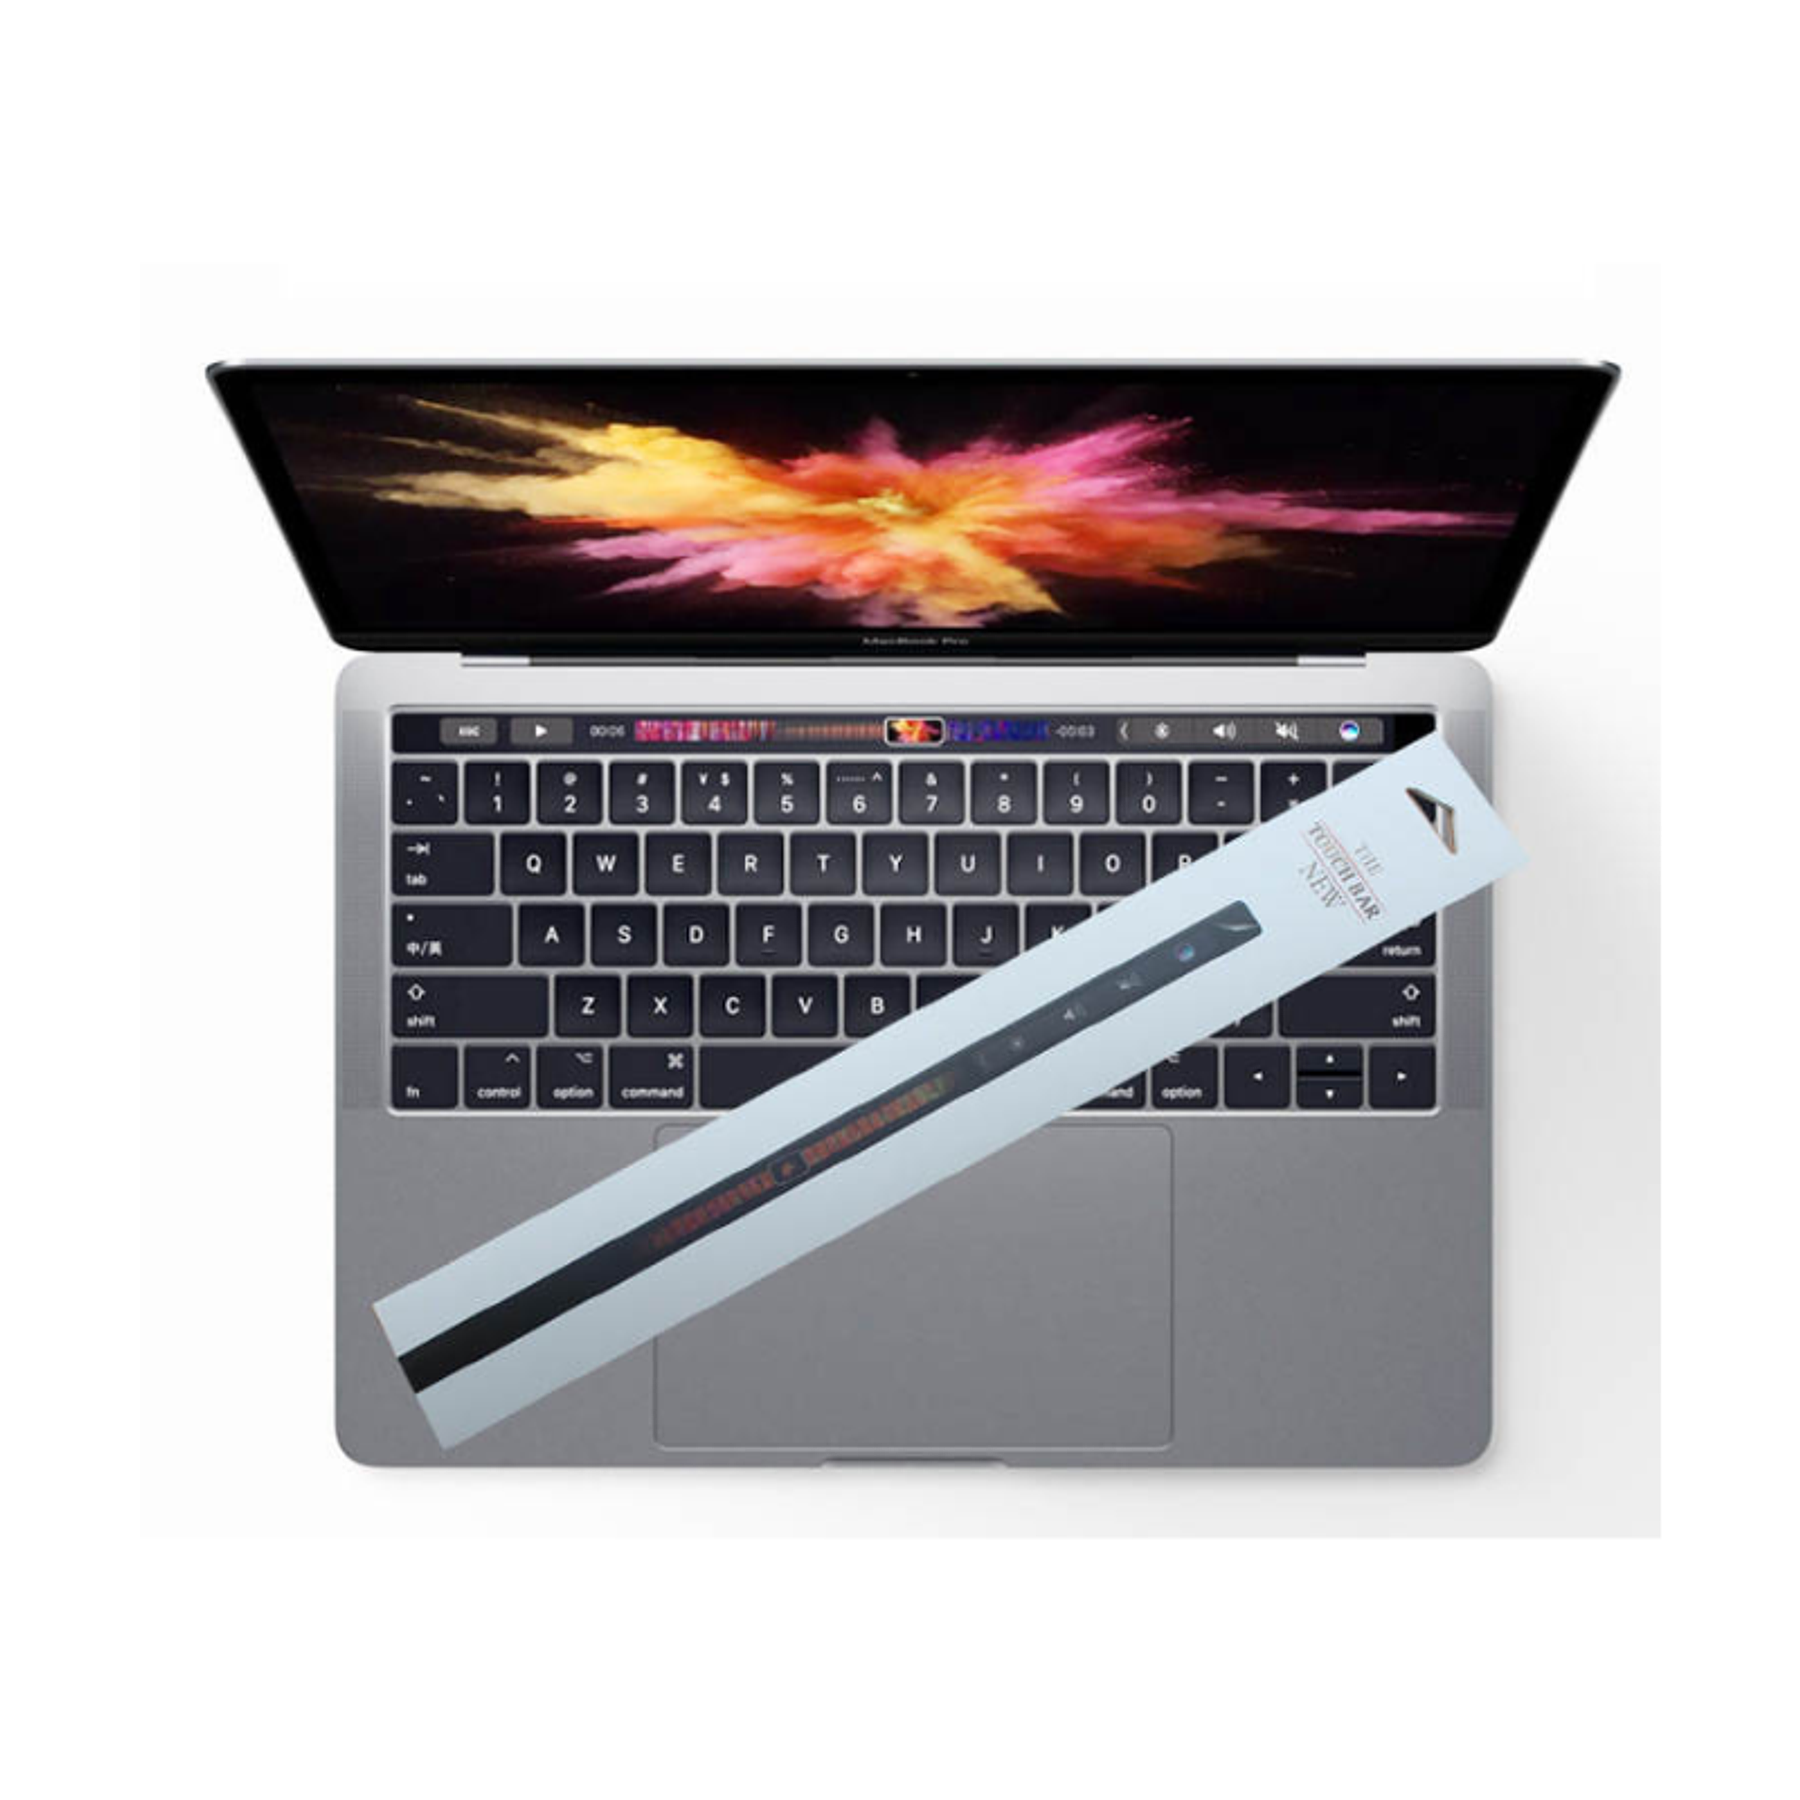 Protector de Touchbar Macbook pro